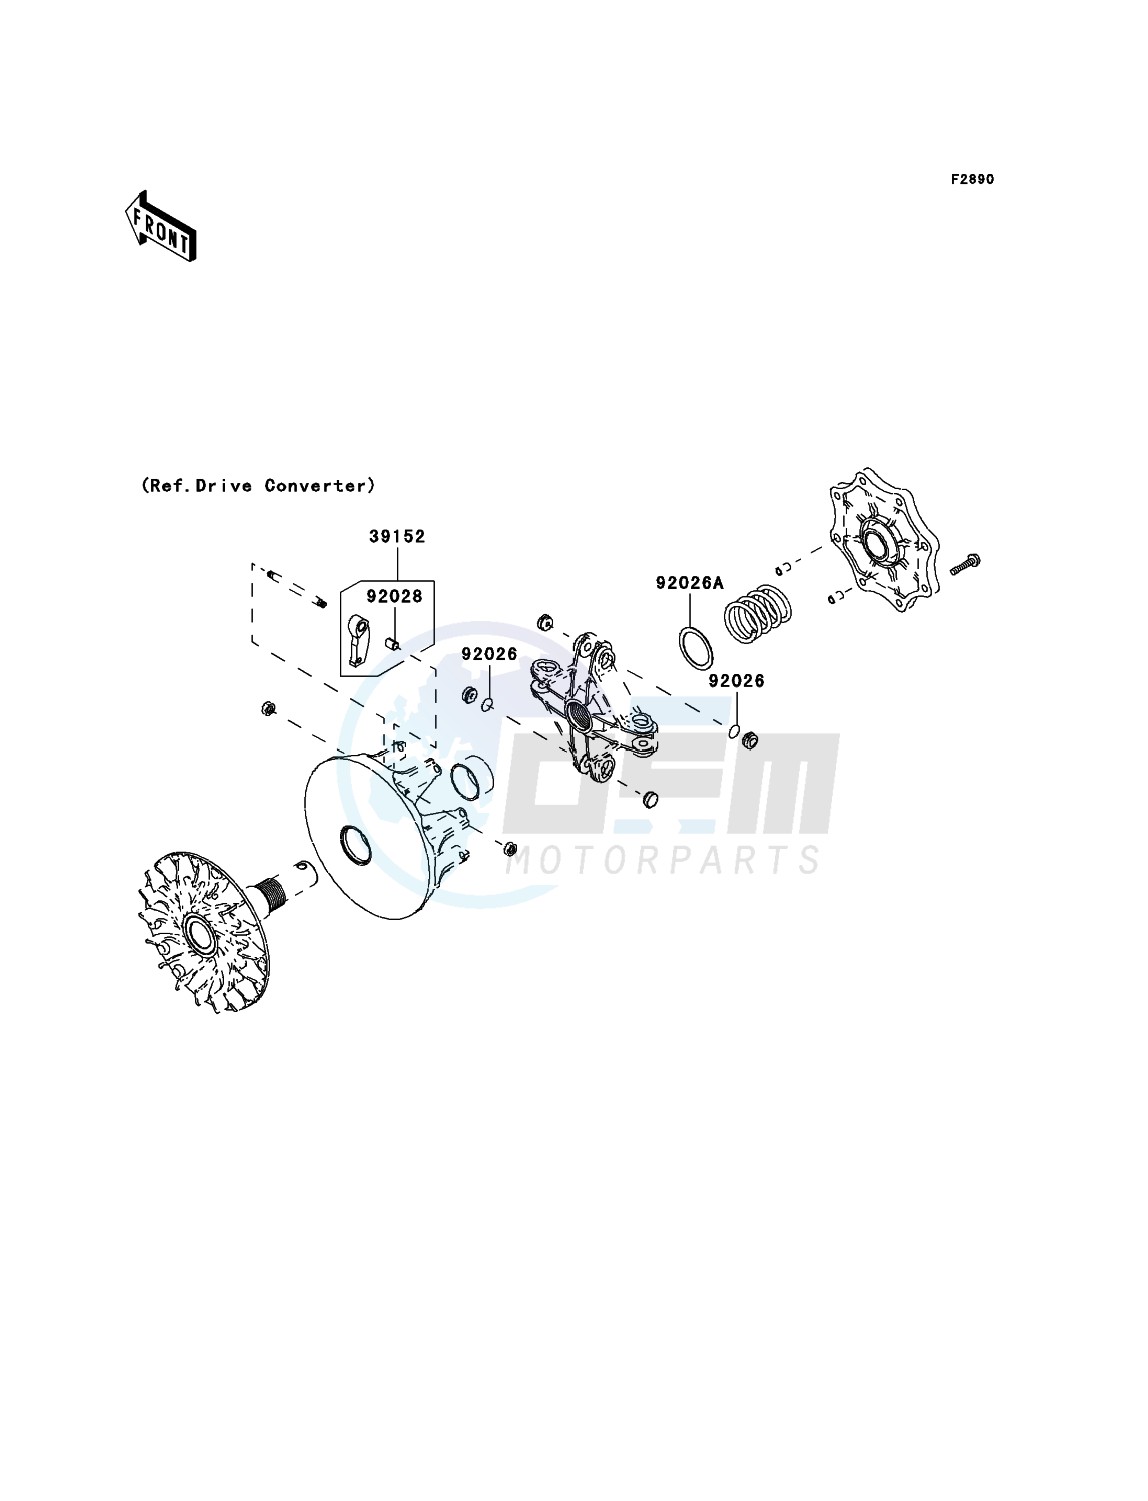 Optional Parts(Drive Converter) blueprint